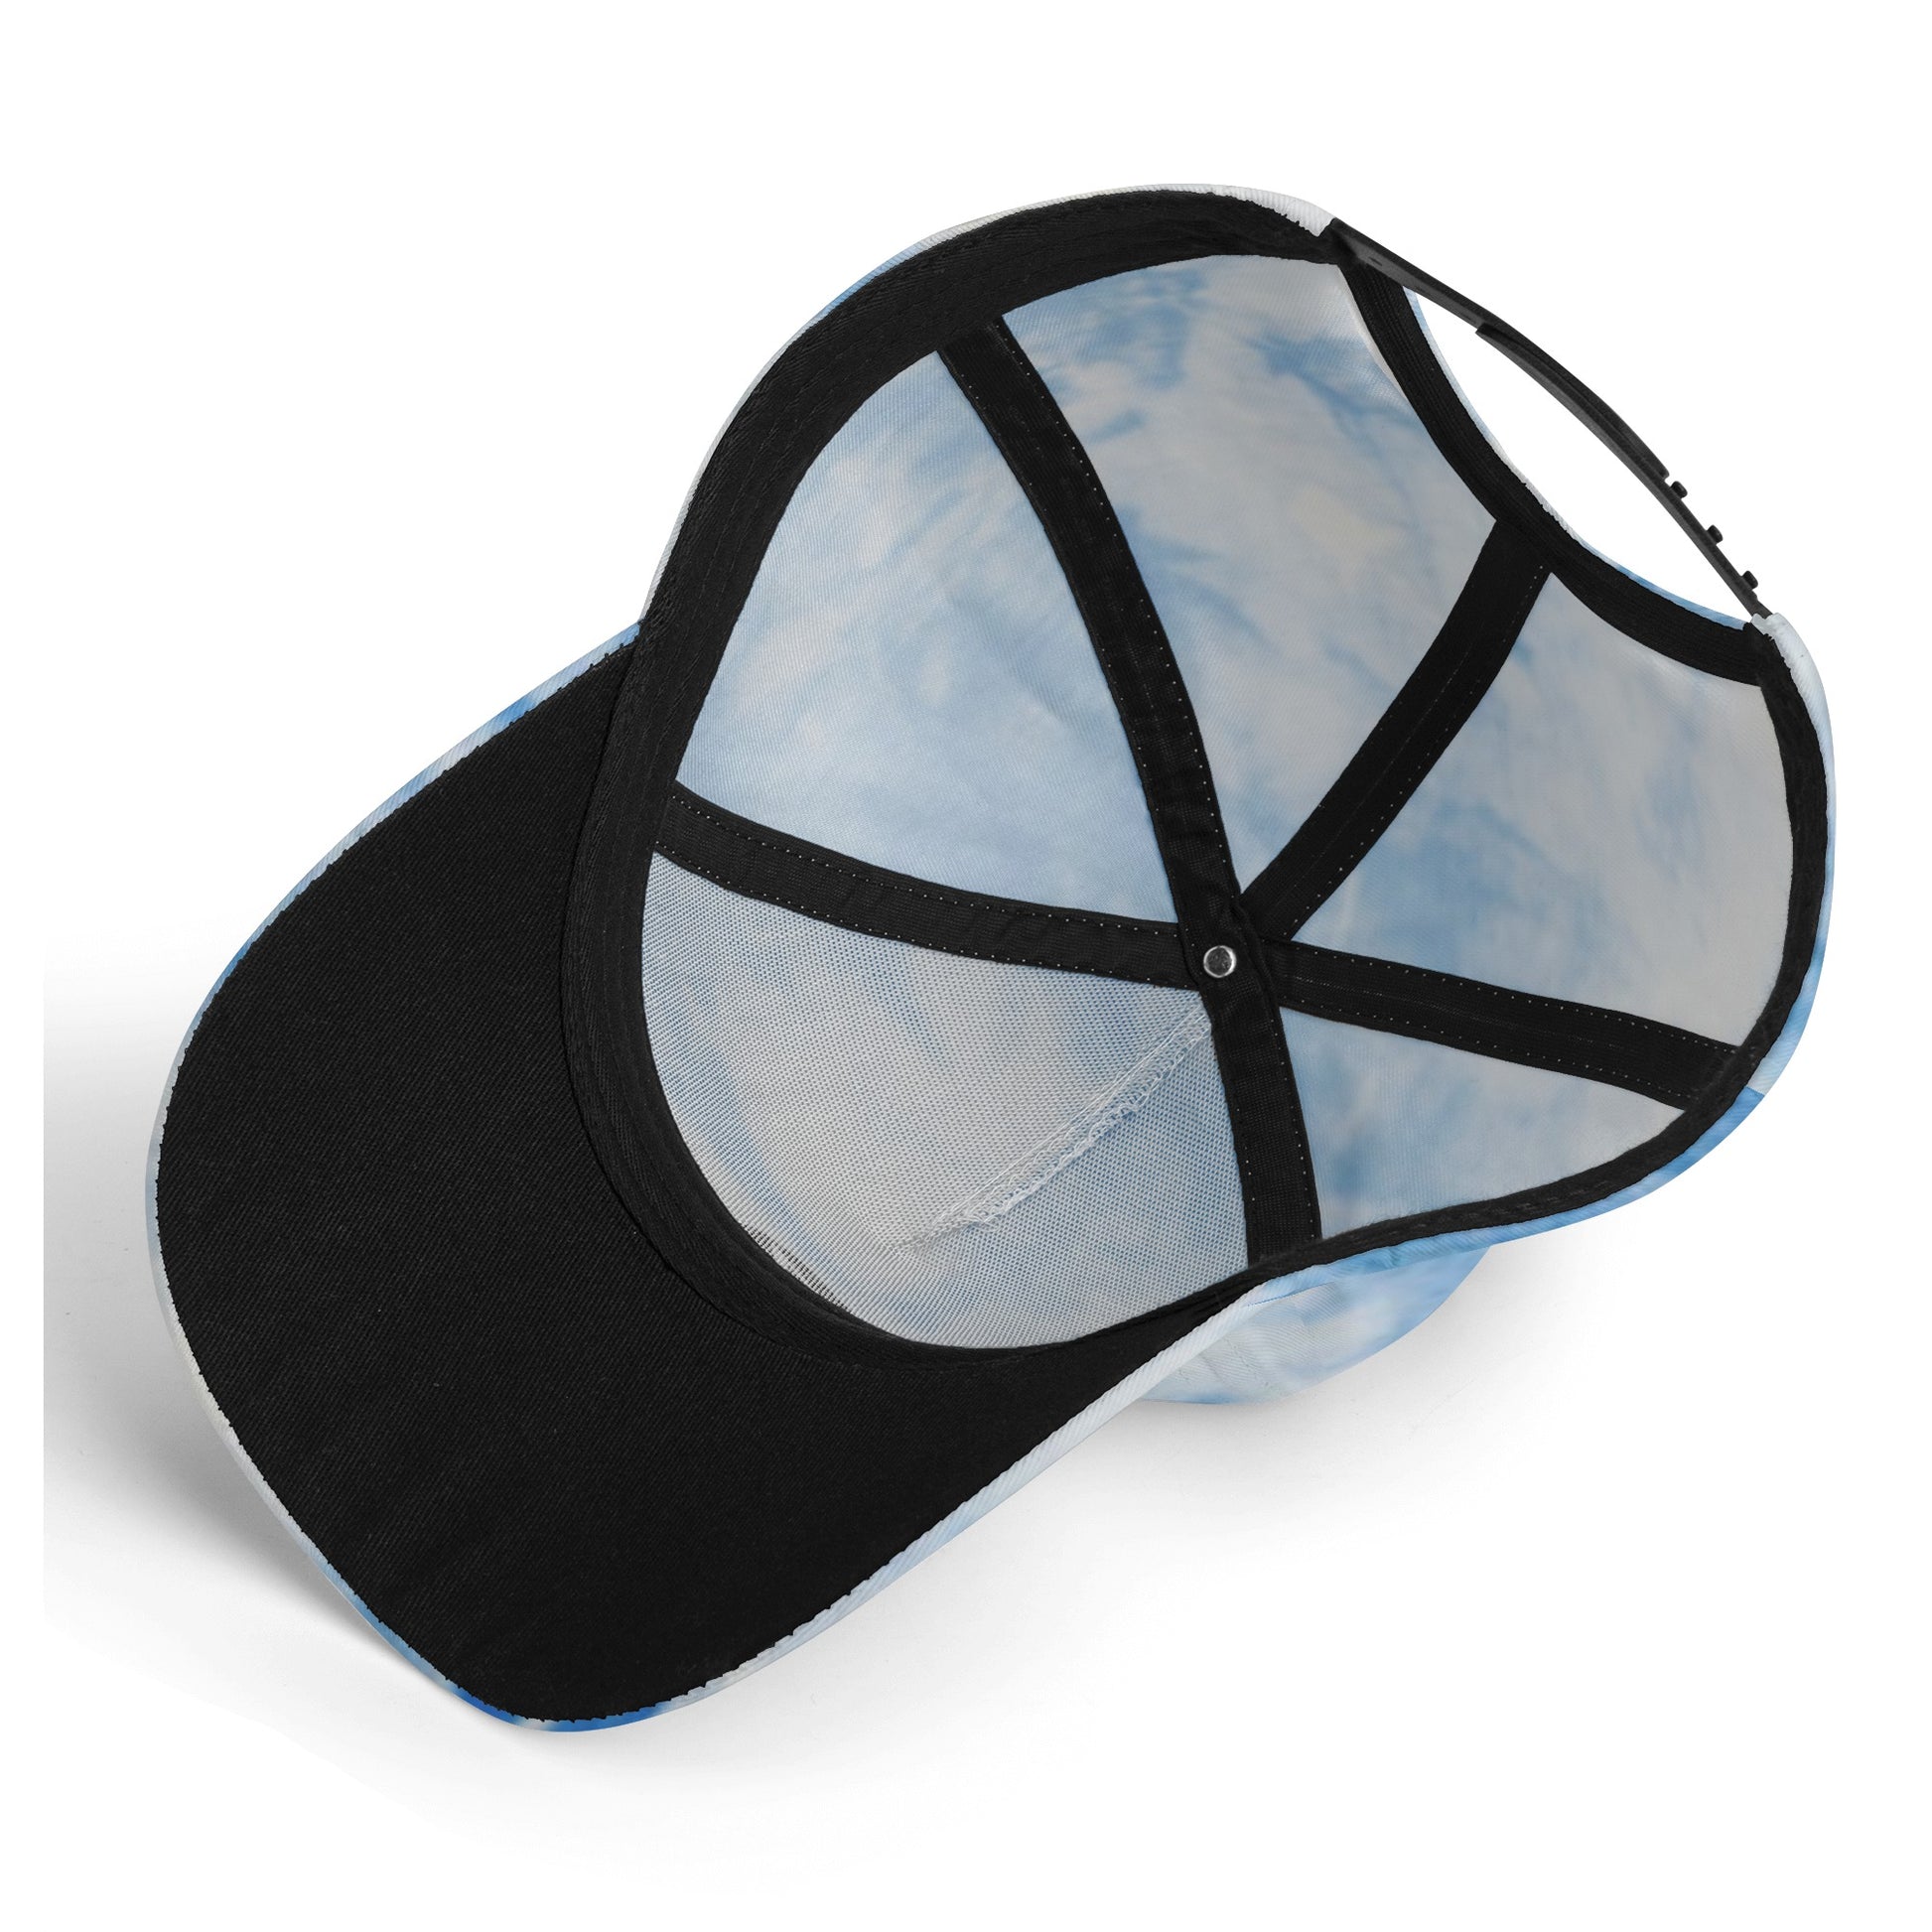 FZ Unisex Baseball Caps - FZwear